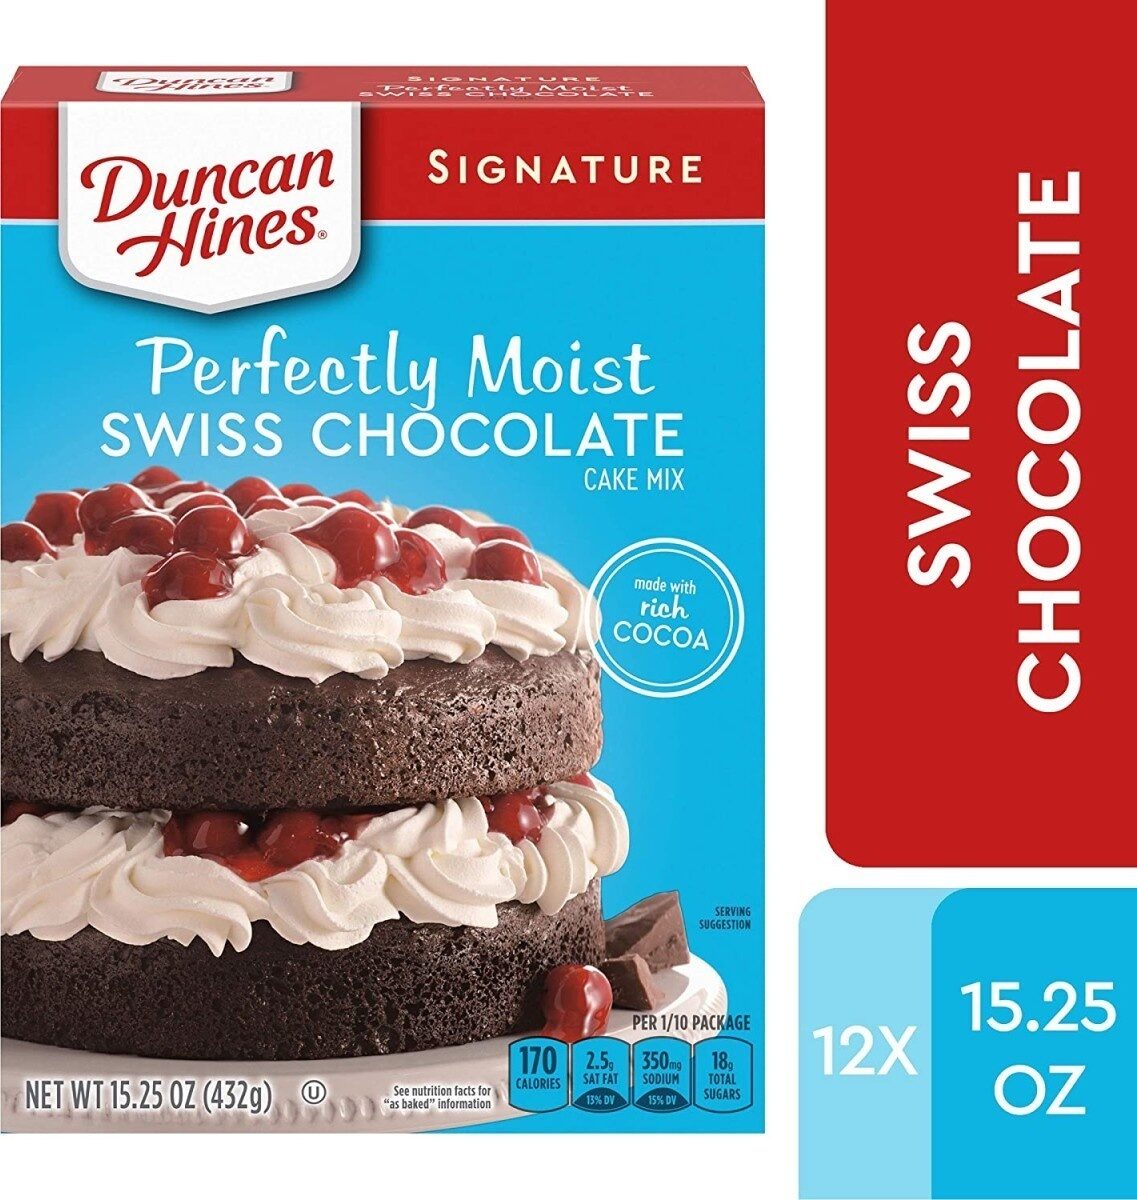 Signature perfectly moist swiss chocolate cake mix - Product - es